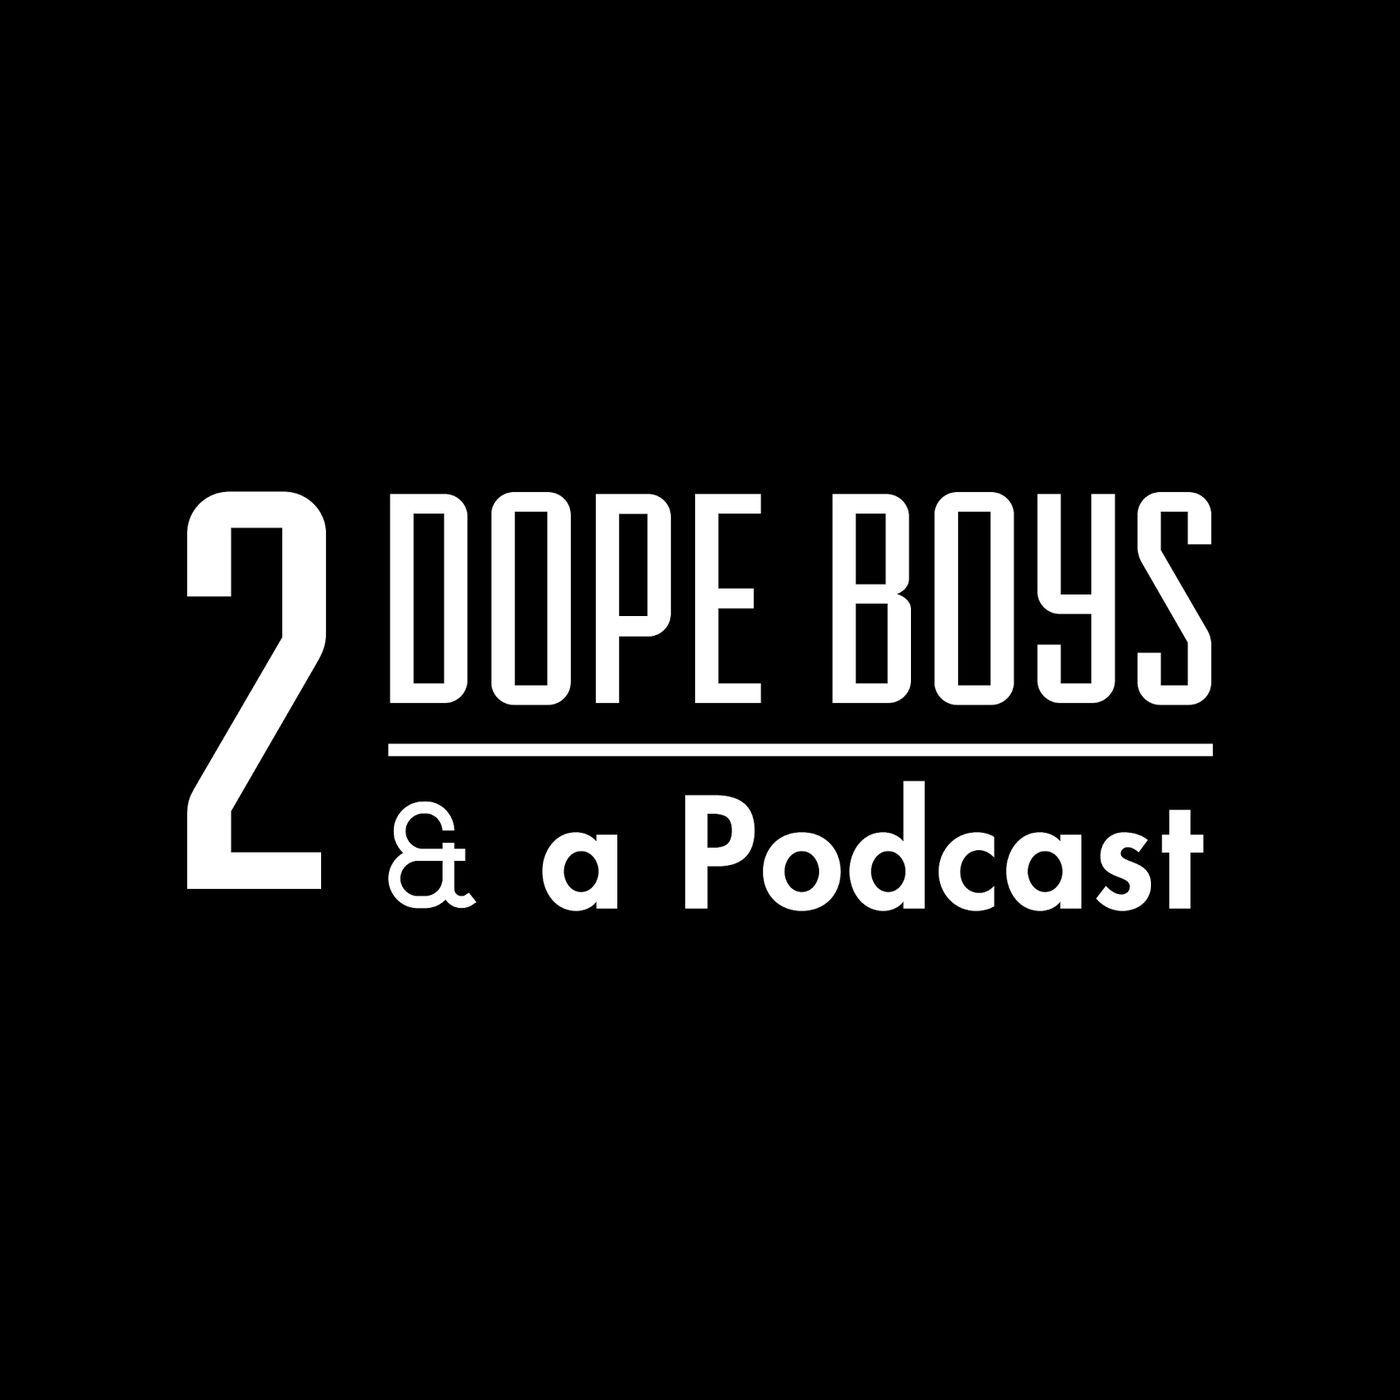 2 Dope Logo - 2 Dope Boys & a Podcast by Majority.FM on Apple Podcasts